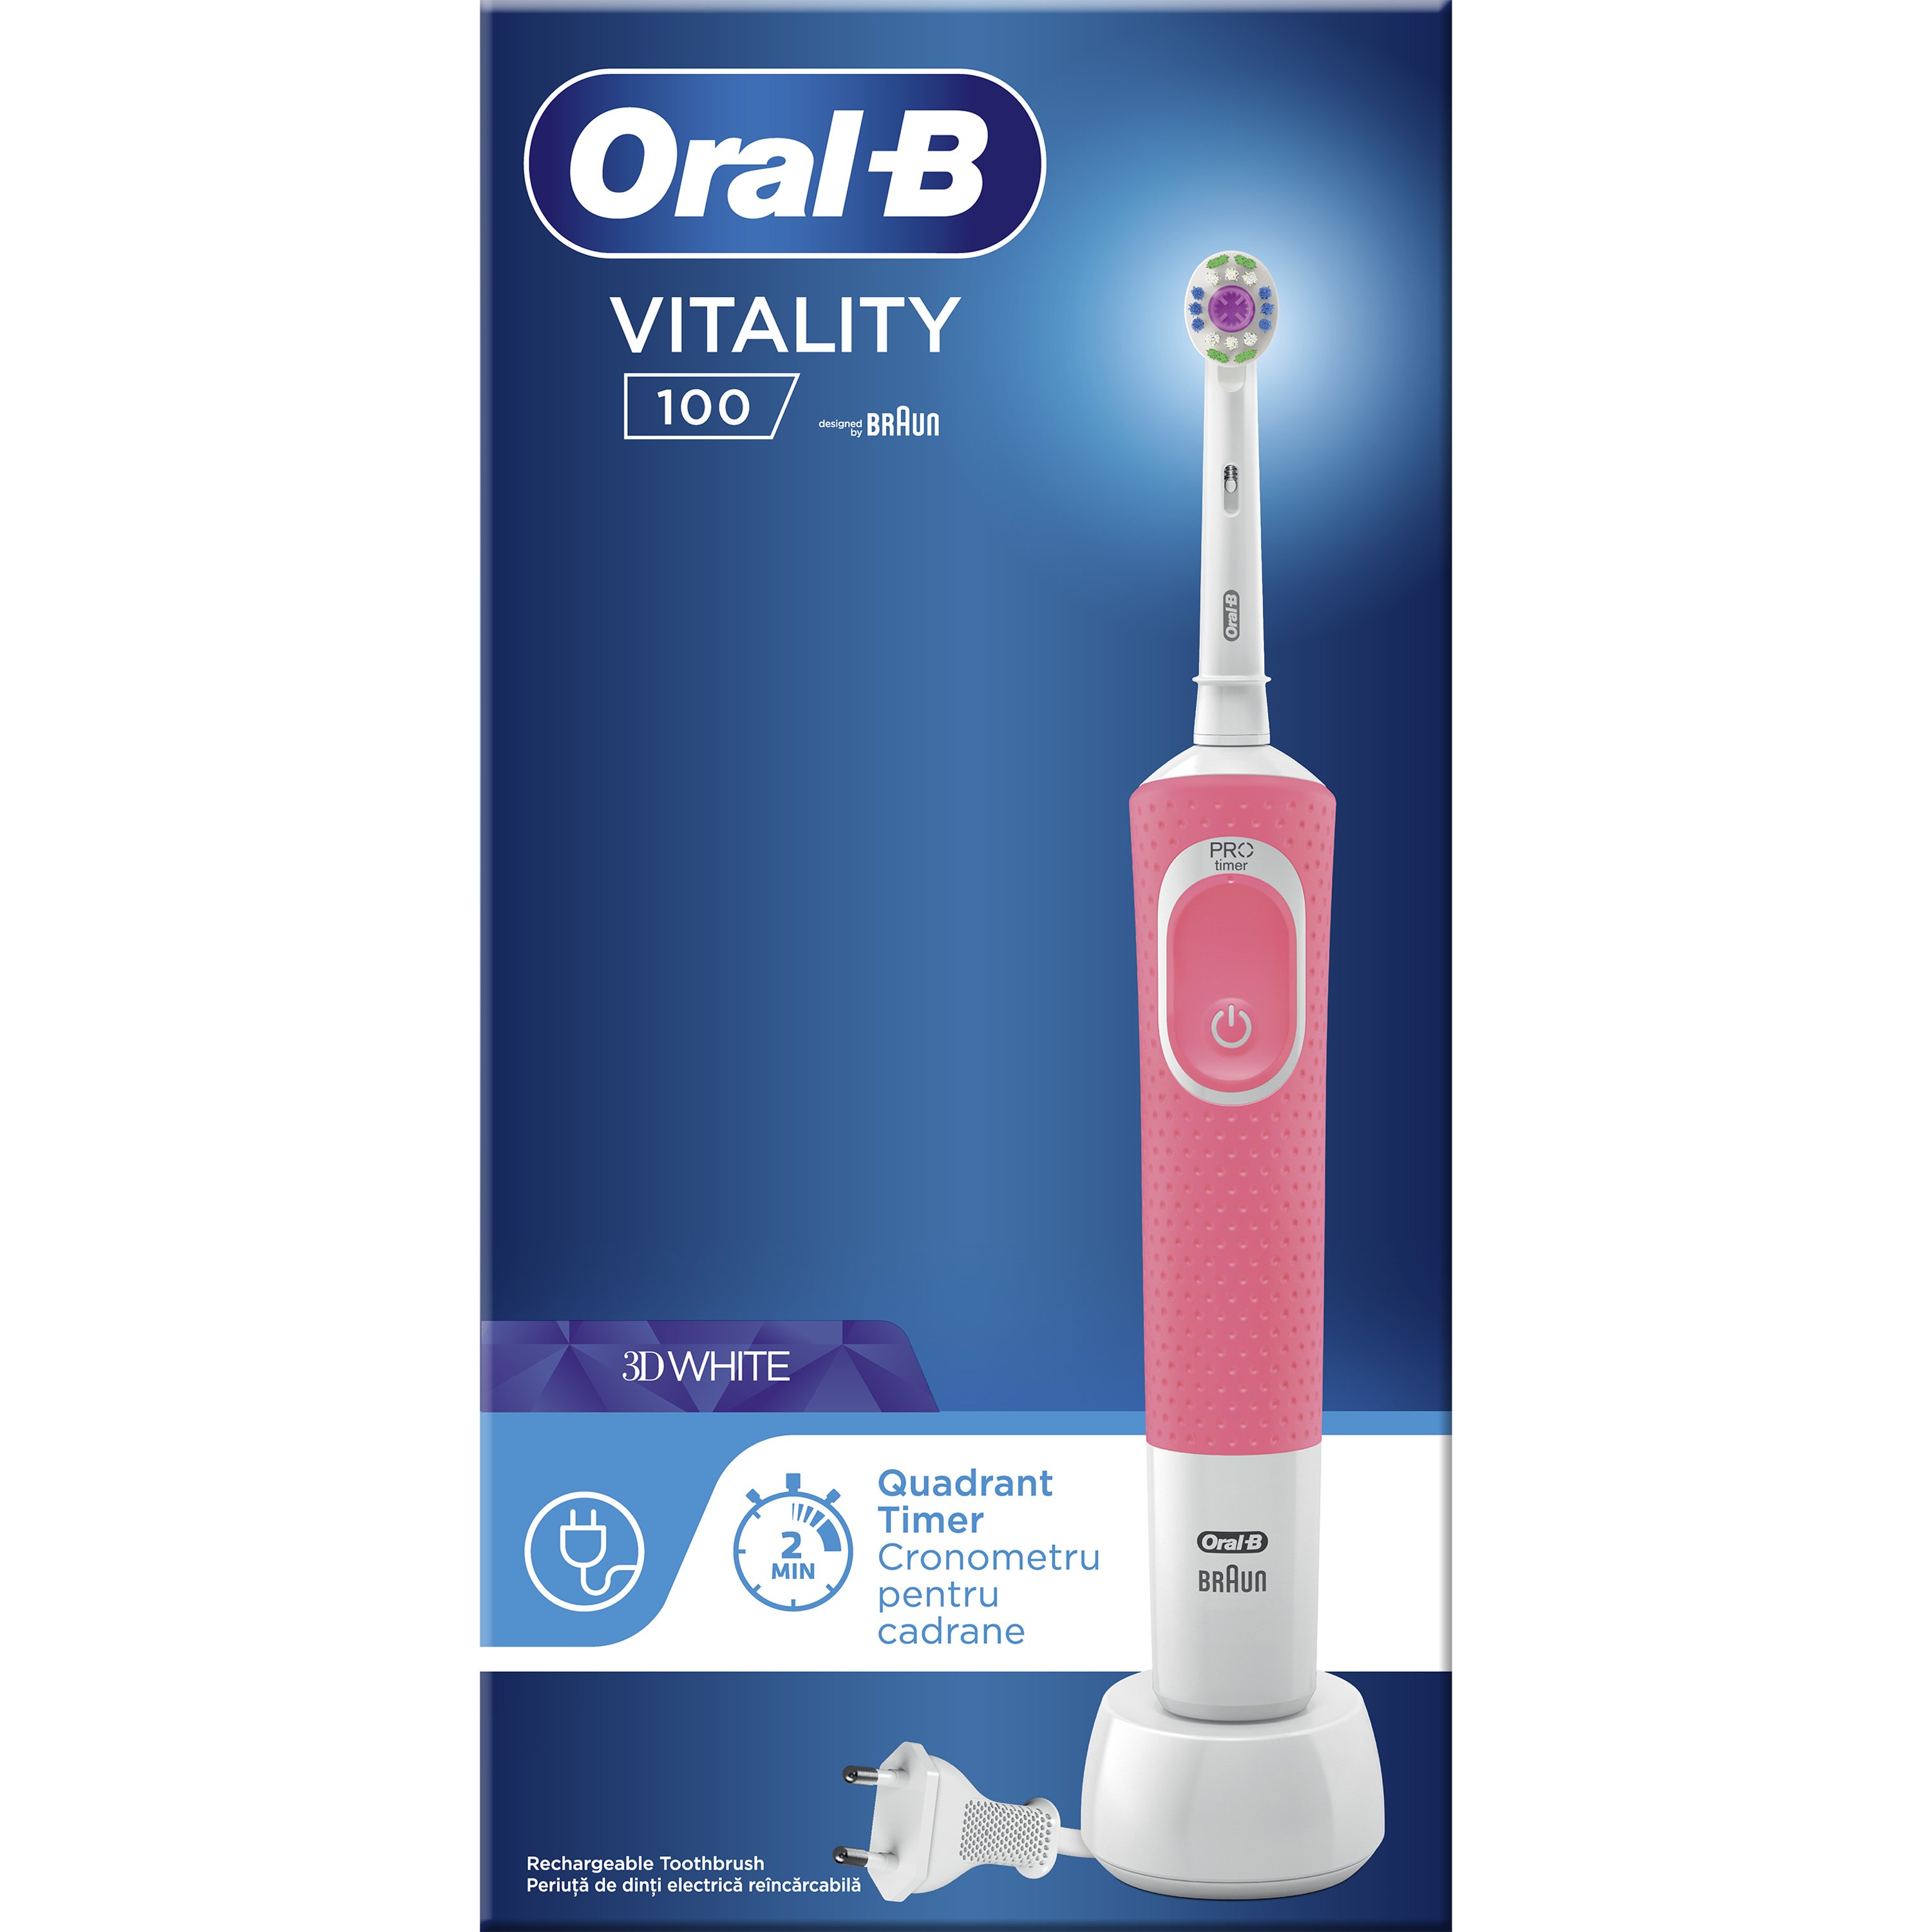 Oral-B Vitality 100 3D White Ηλεκτρική Οδοντόβουρτσα σε Ροζ Χρώμα 1 τεμάχιο 30477